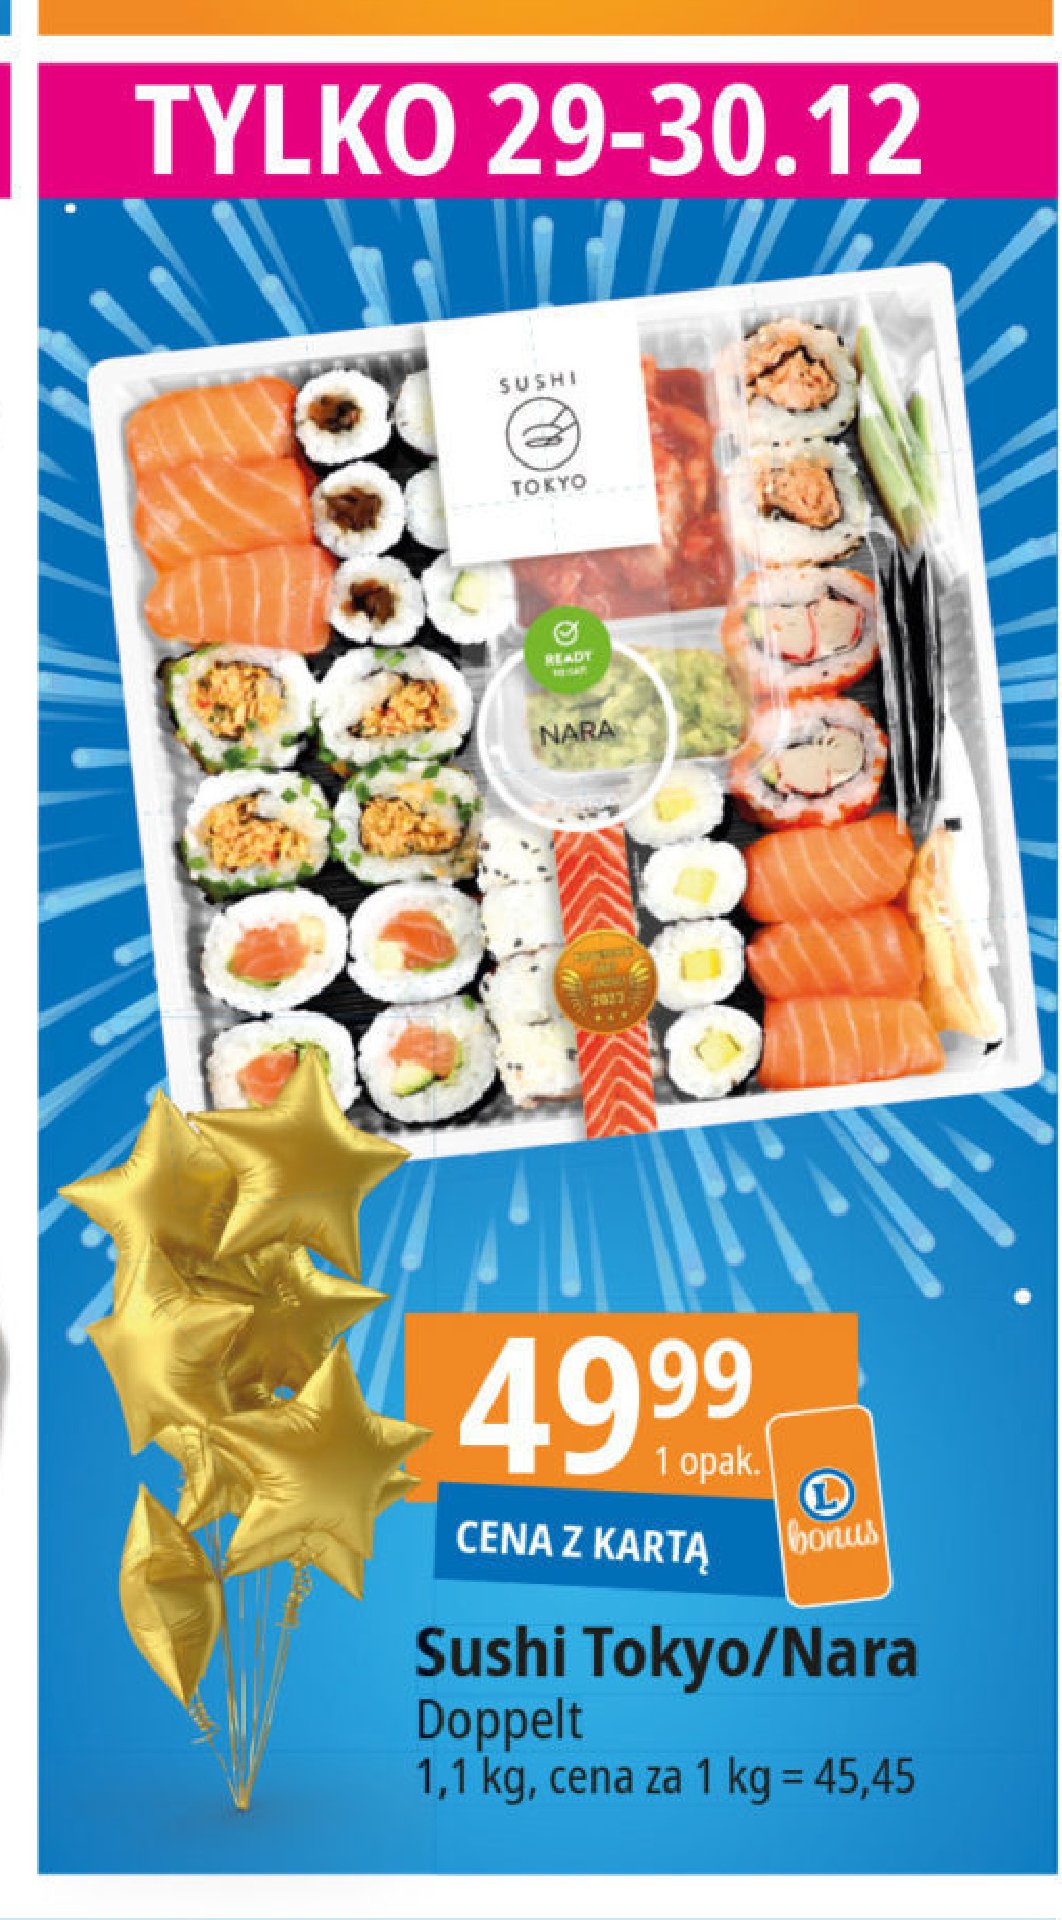 Sushi tokyo Doppelt promocja